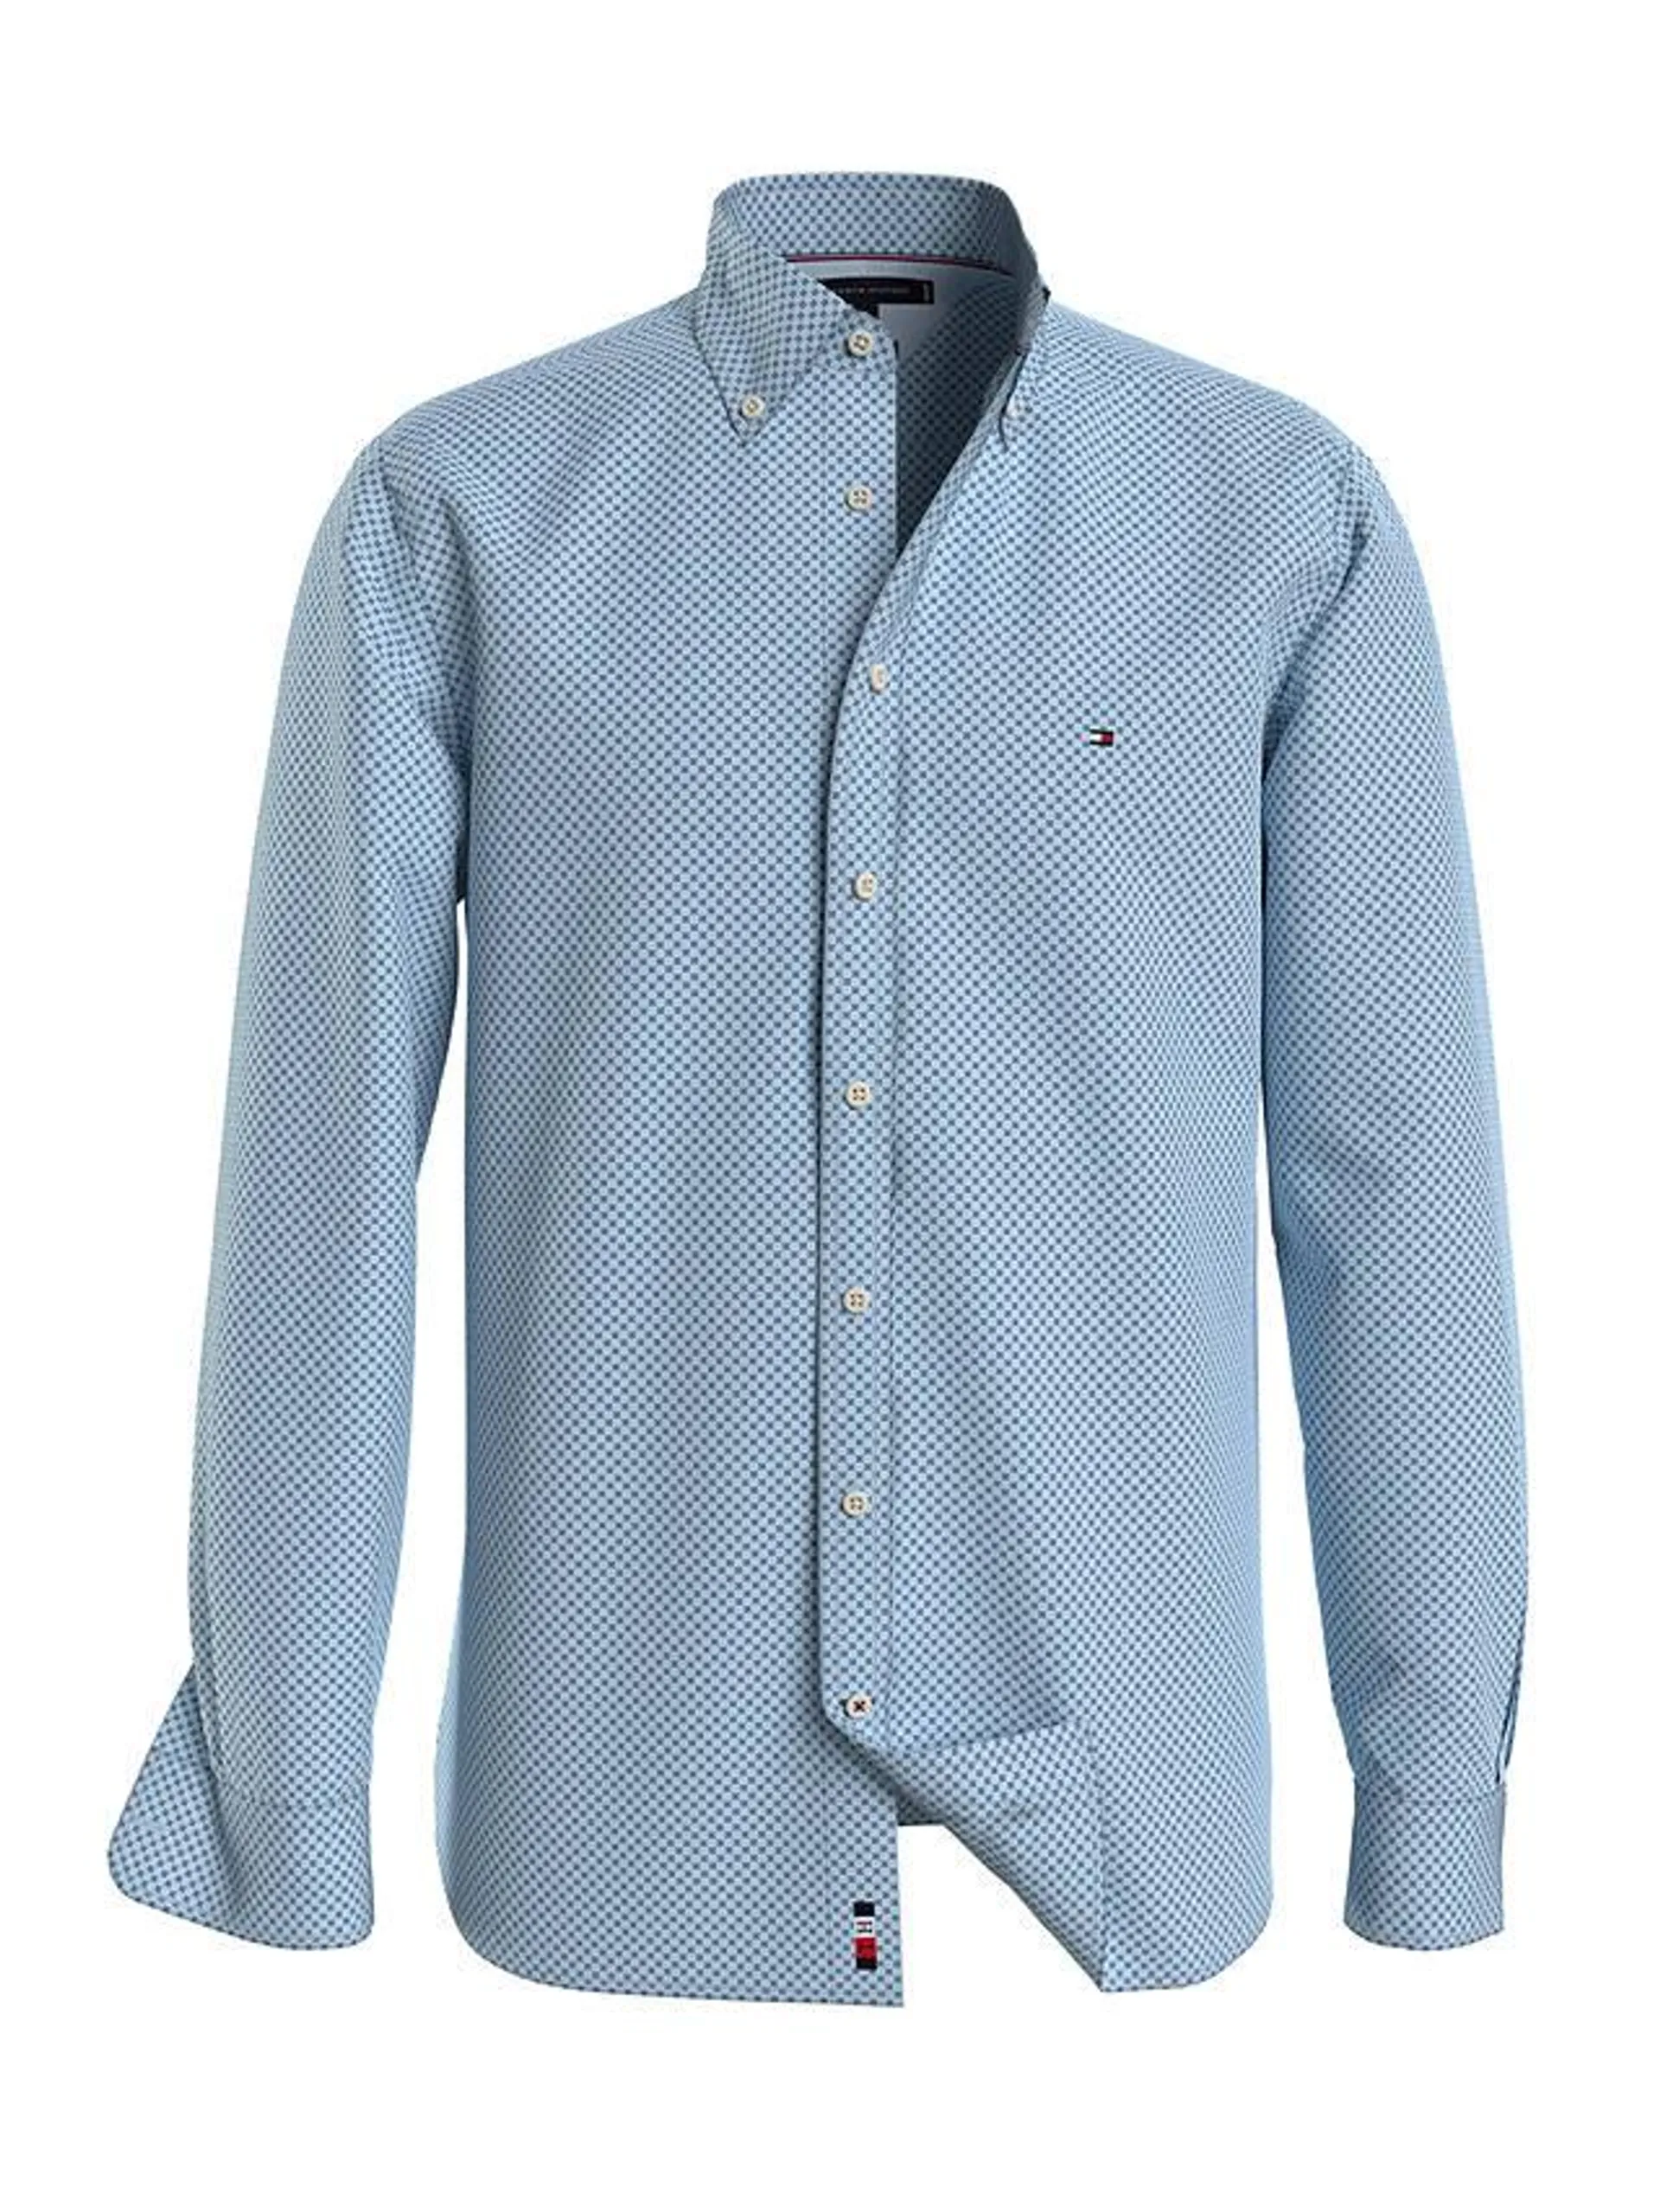 Tommy Hilfiger Micro Print Regular Fit Poplin Cotton Shirt, Clo Blue/Navy